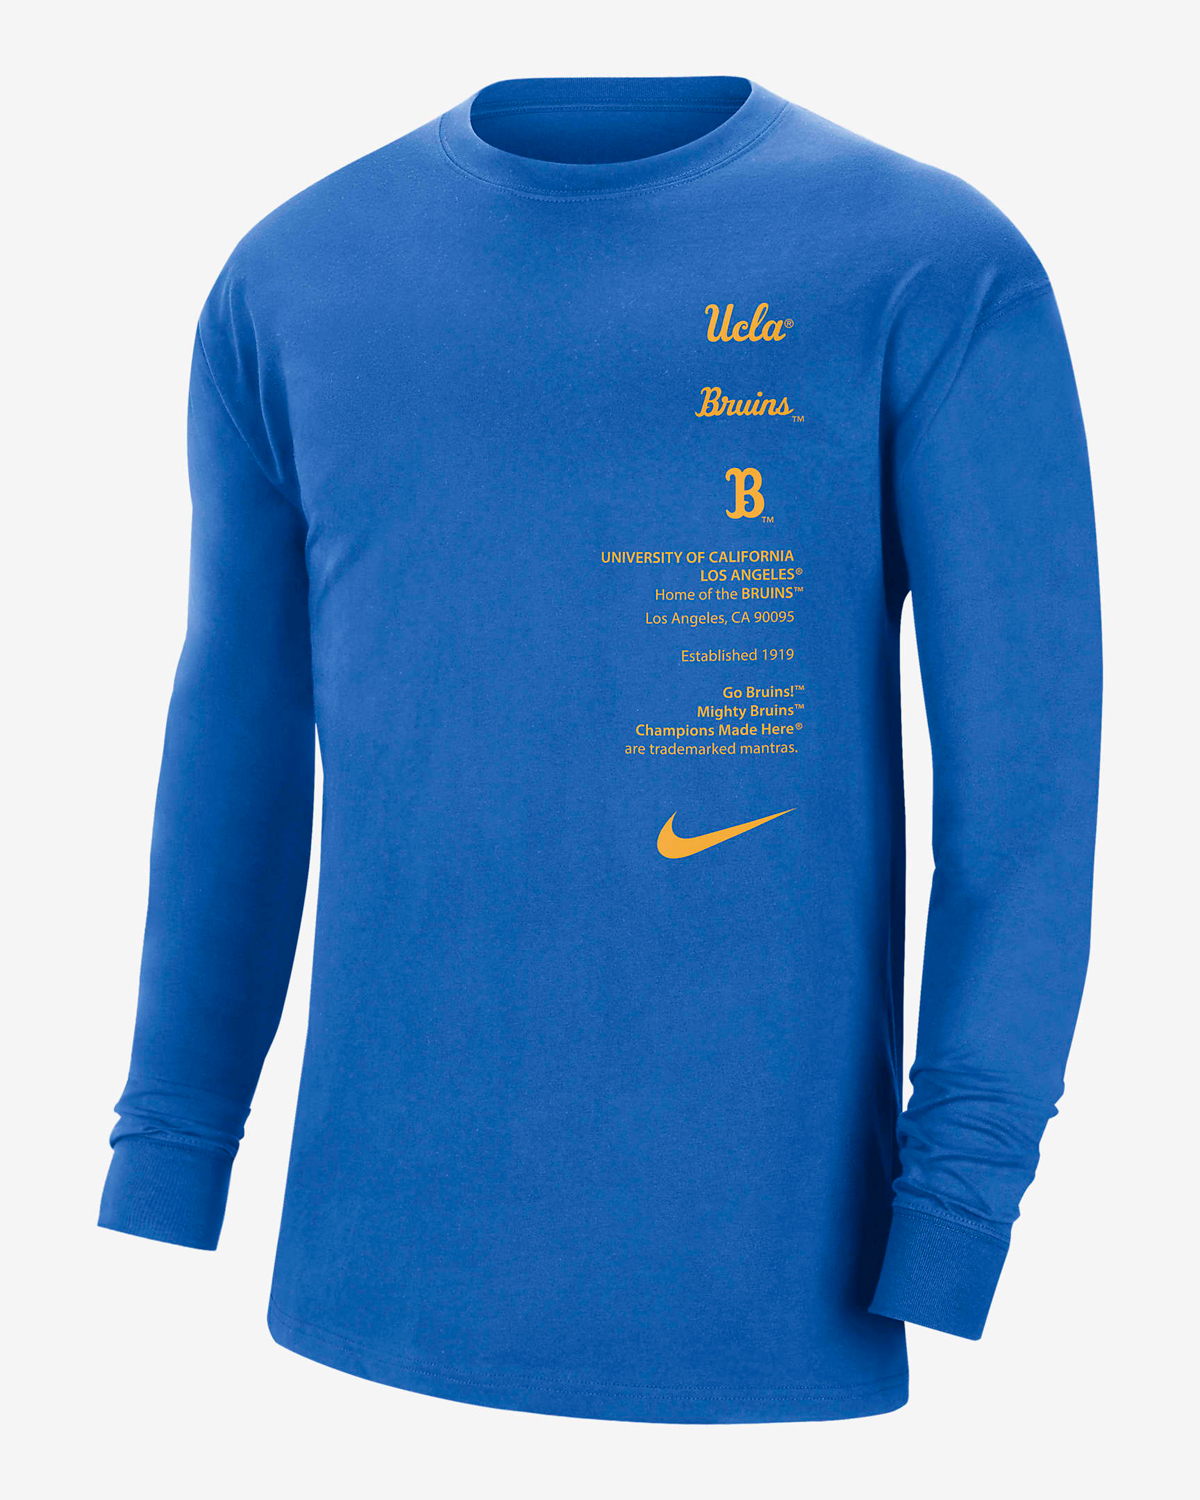 Nike-Dunk-Low-UCLA-Bruins-Shirt-1